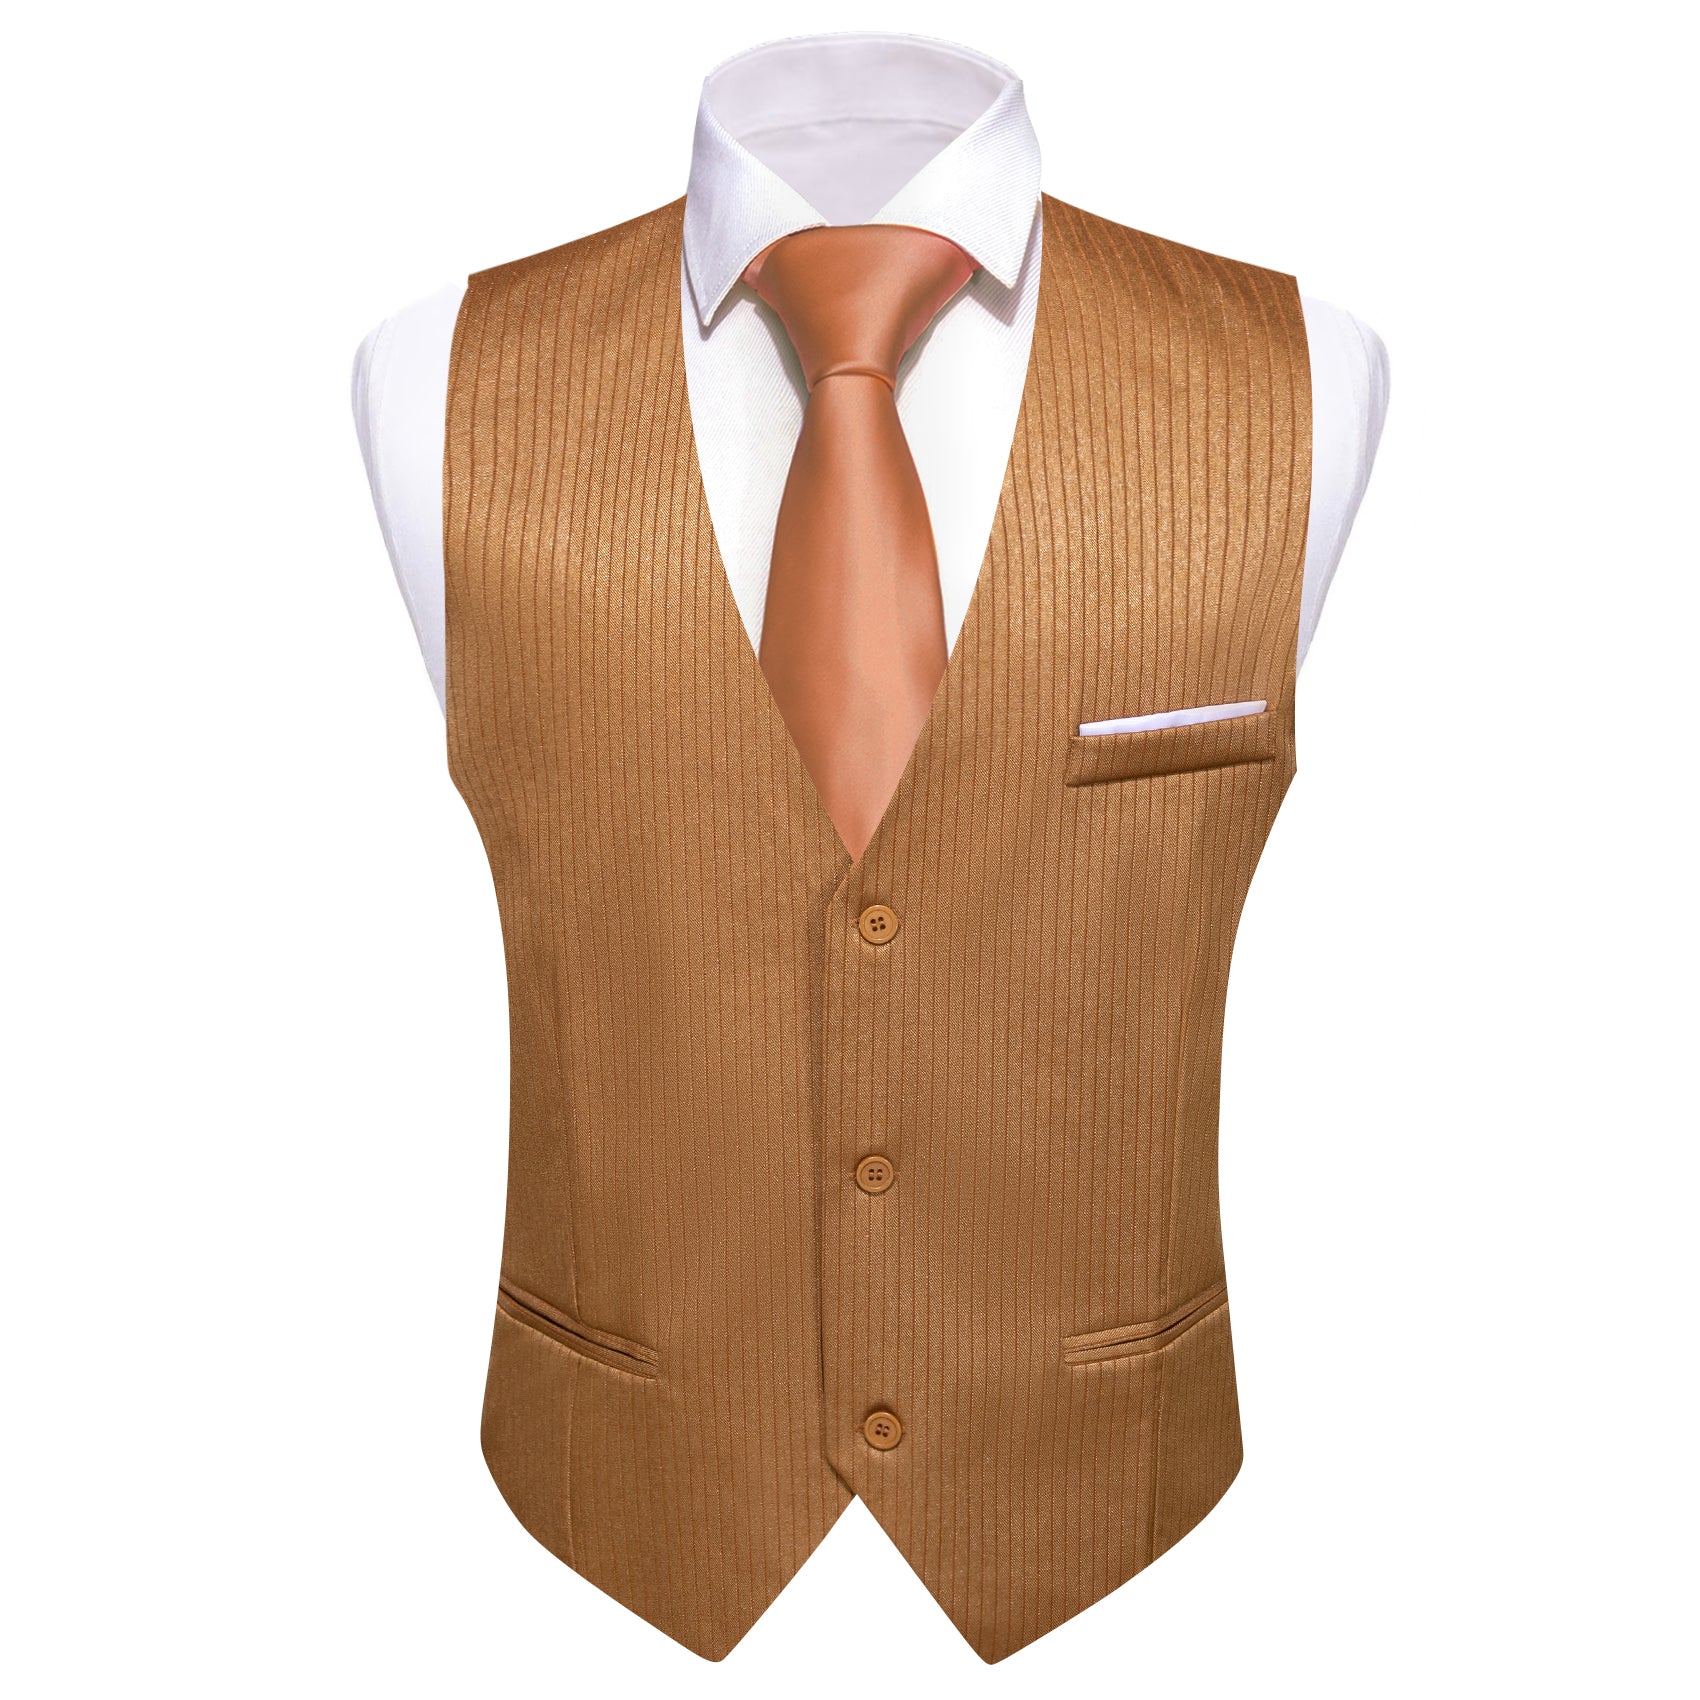 Barry.wang Peru Solid Business Vest Suit